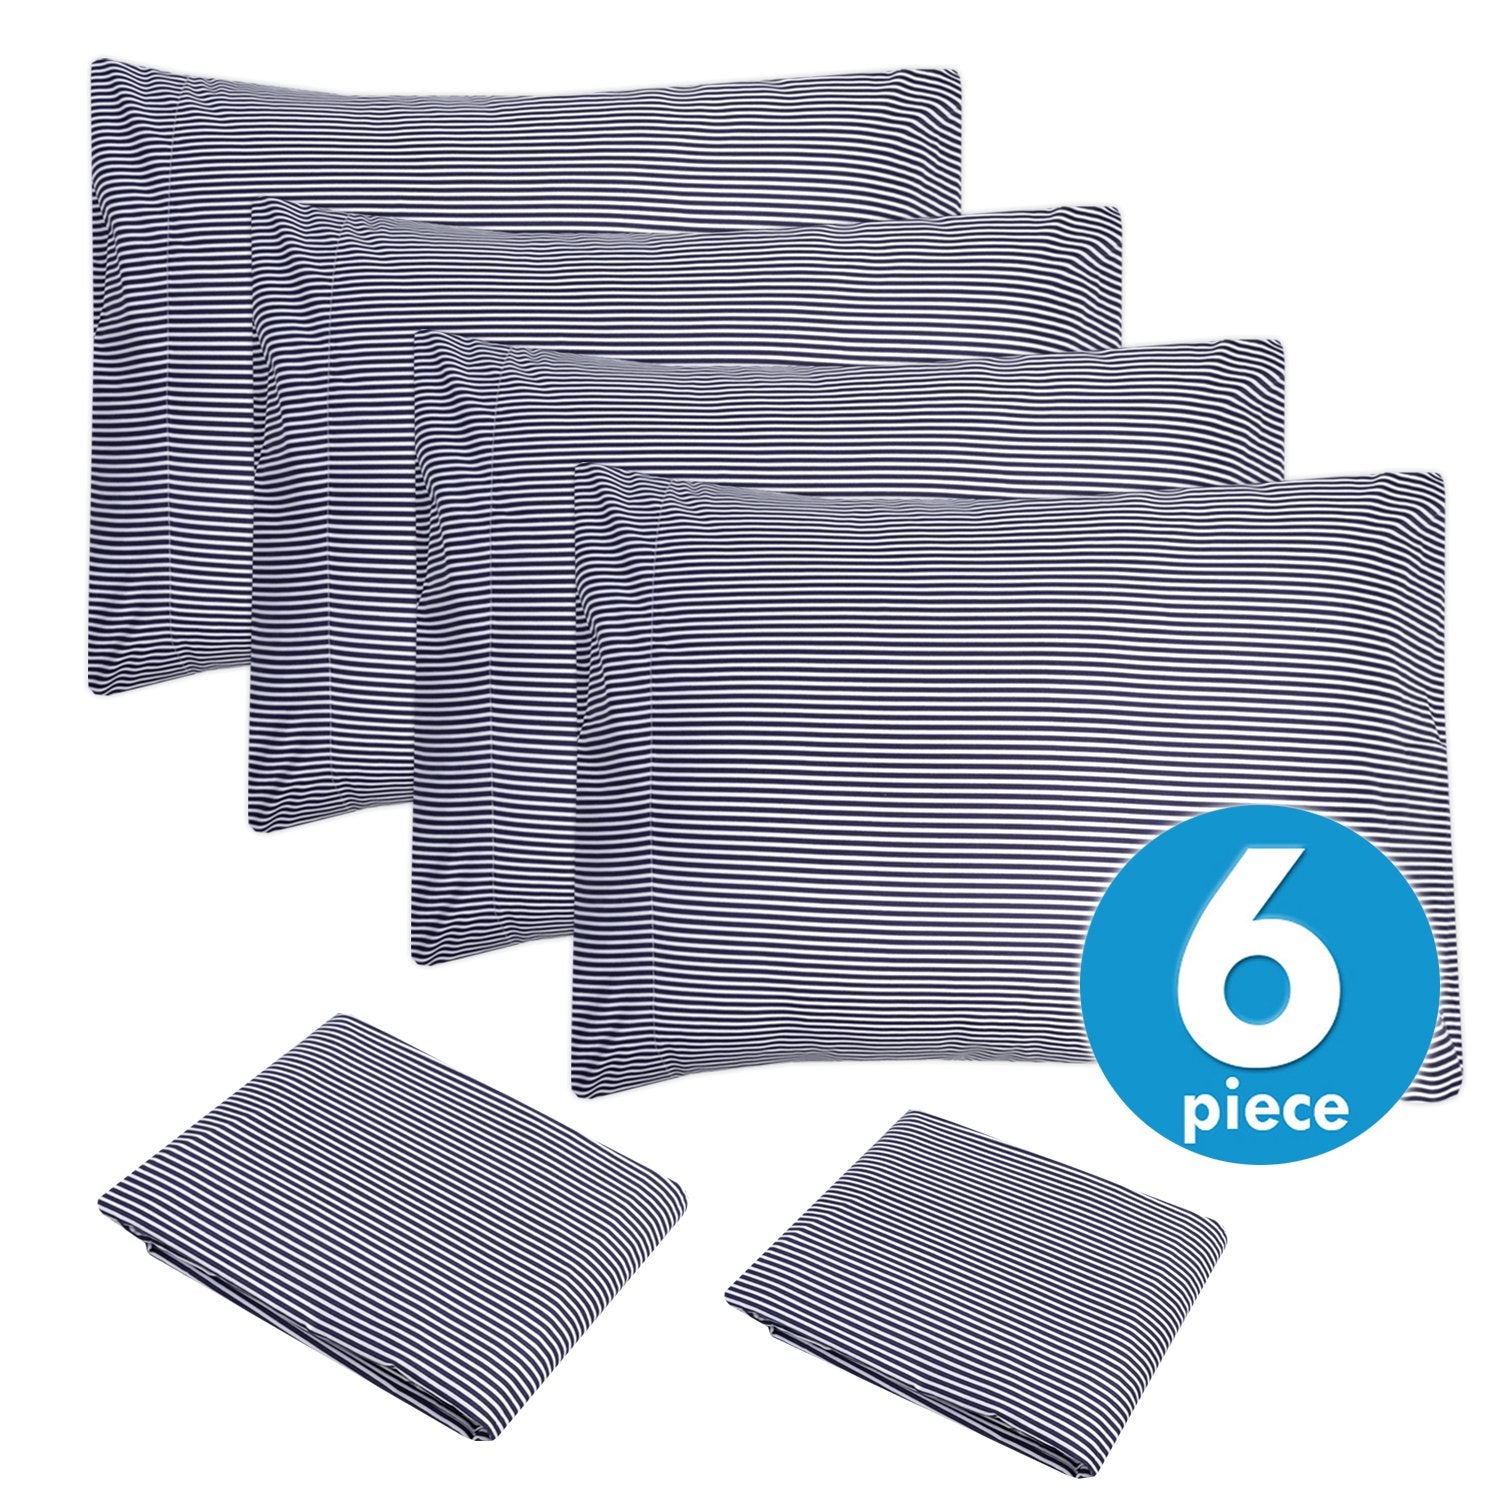 Deluxe 6-Piece Bed Sheet Set (Loft Classic Stripe Navy) - Set